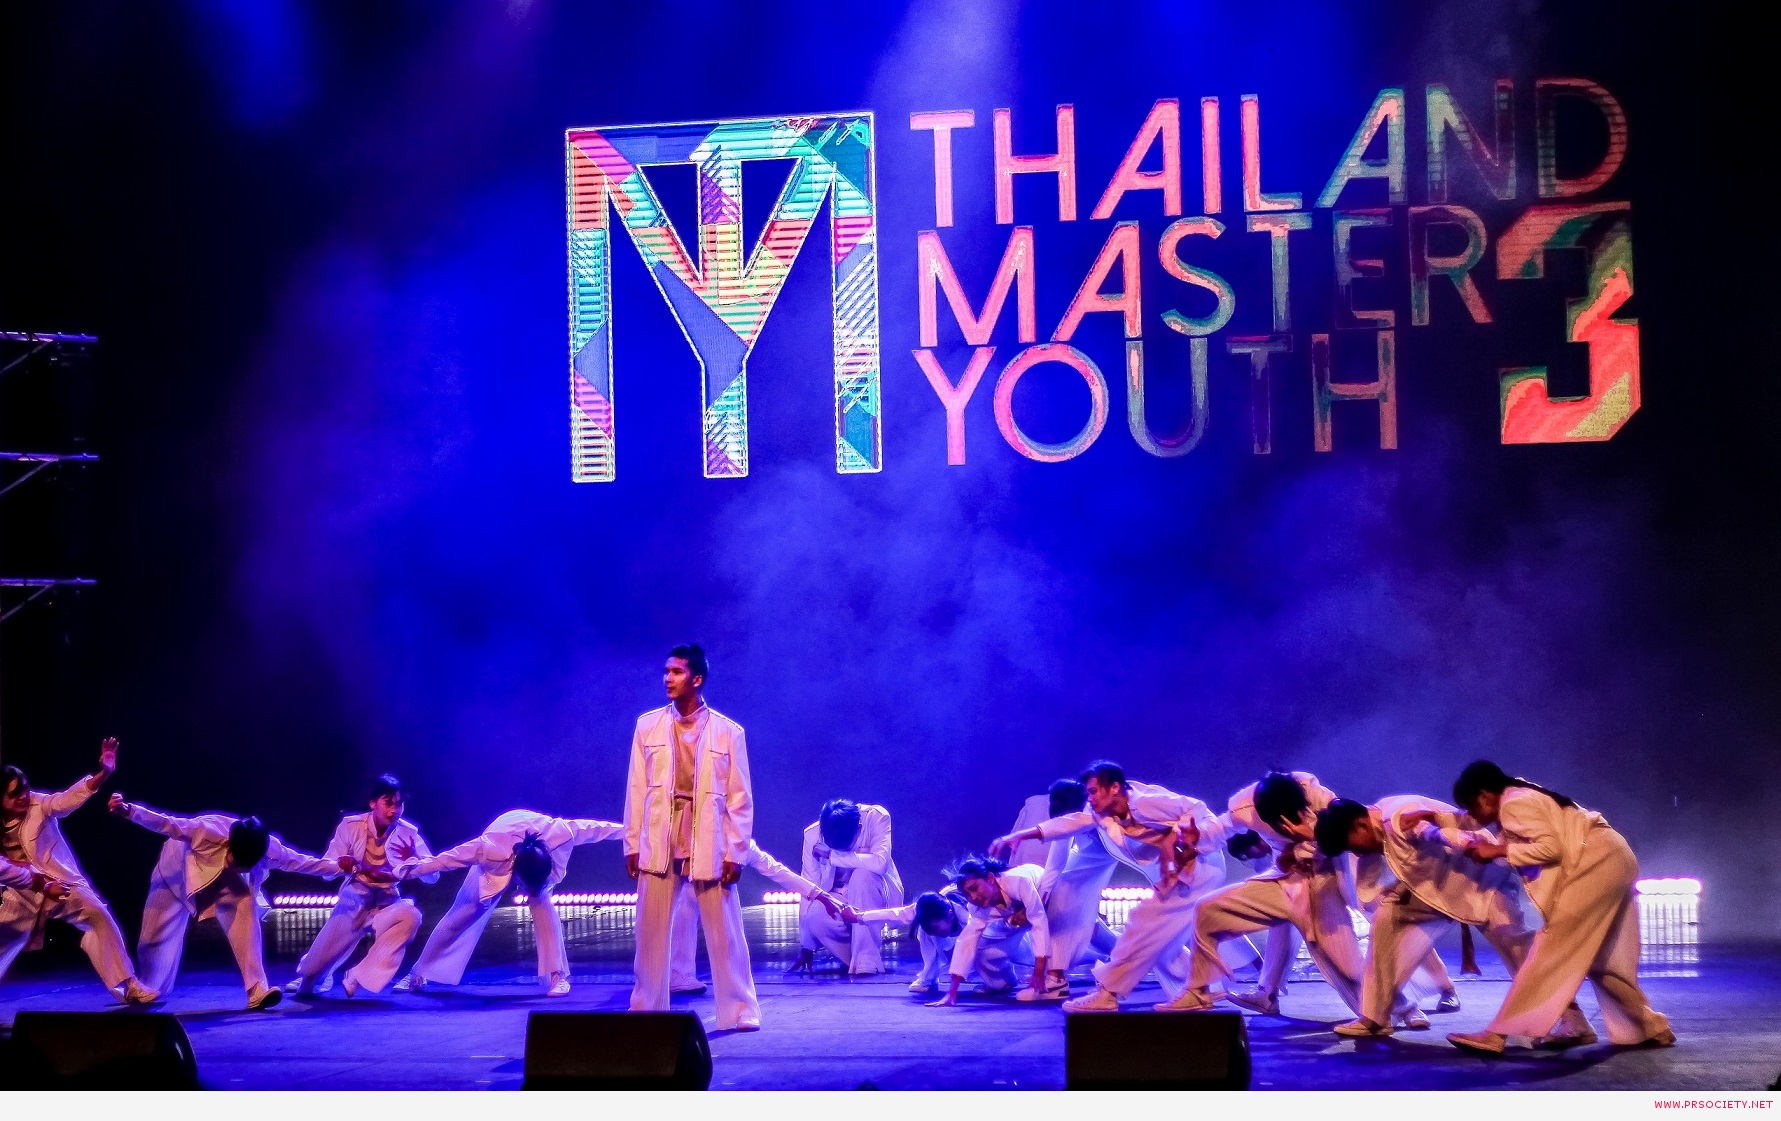 THAILAND MASTER YOUTH_25